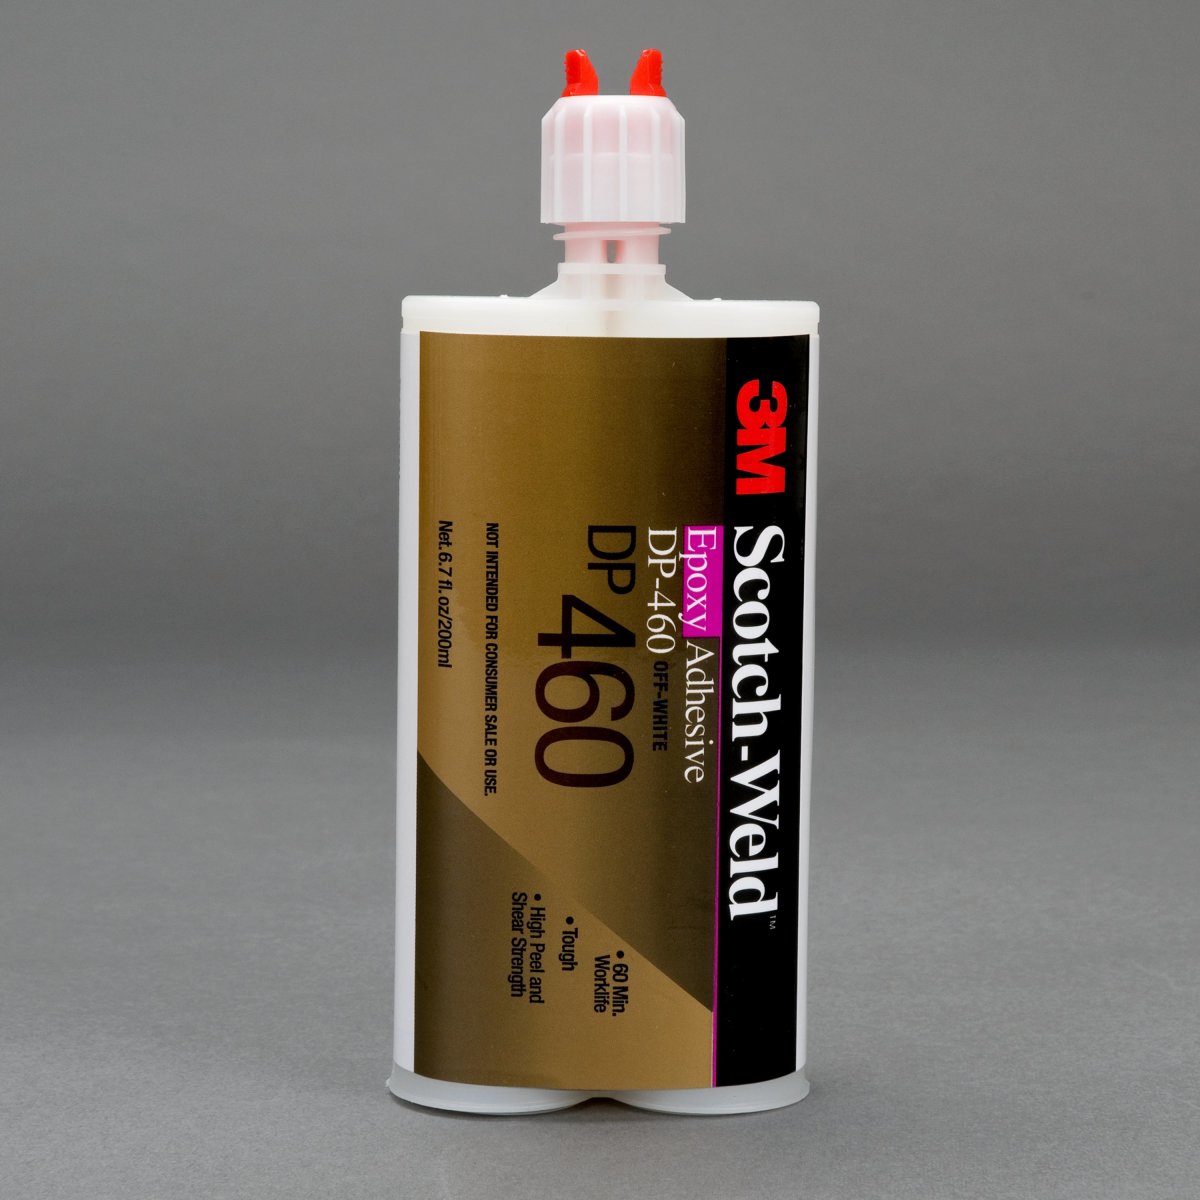 3M™ Foam and Fabric Spray Adhesive 24, Orange, 16 fl oz Can (Net